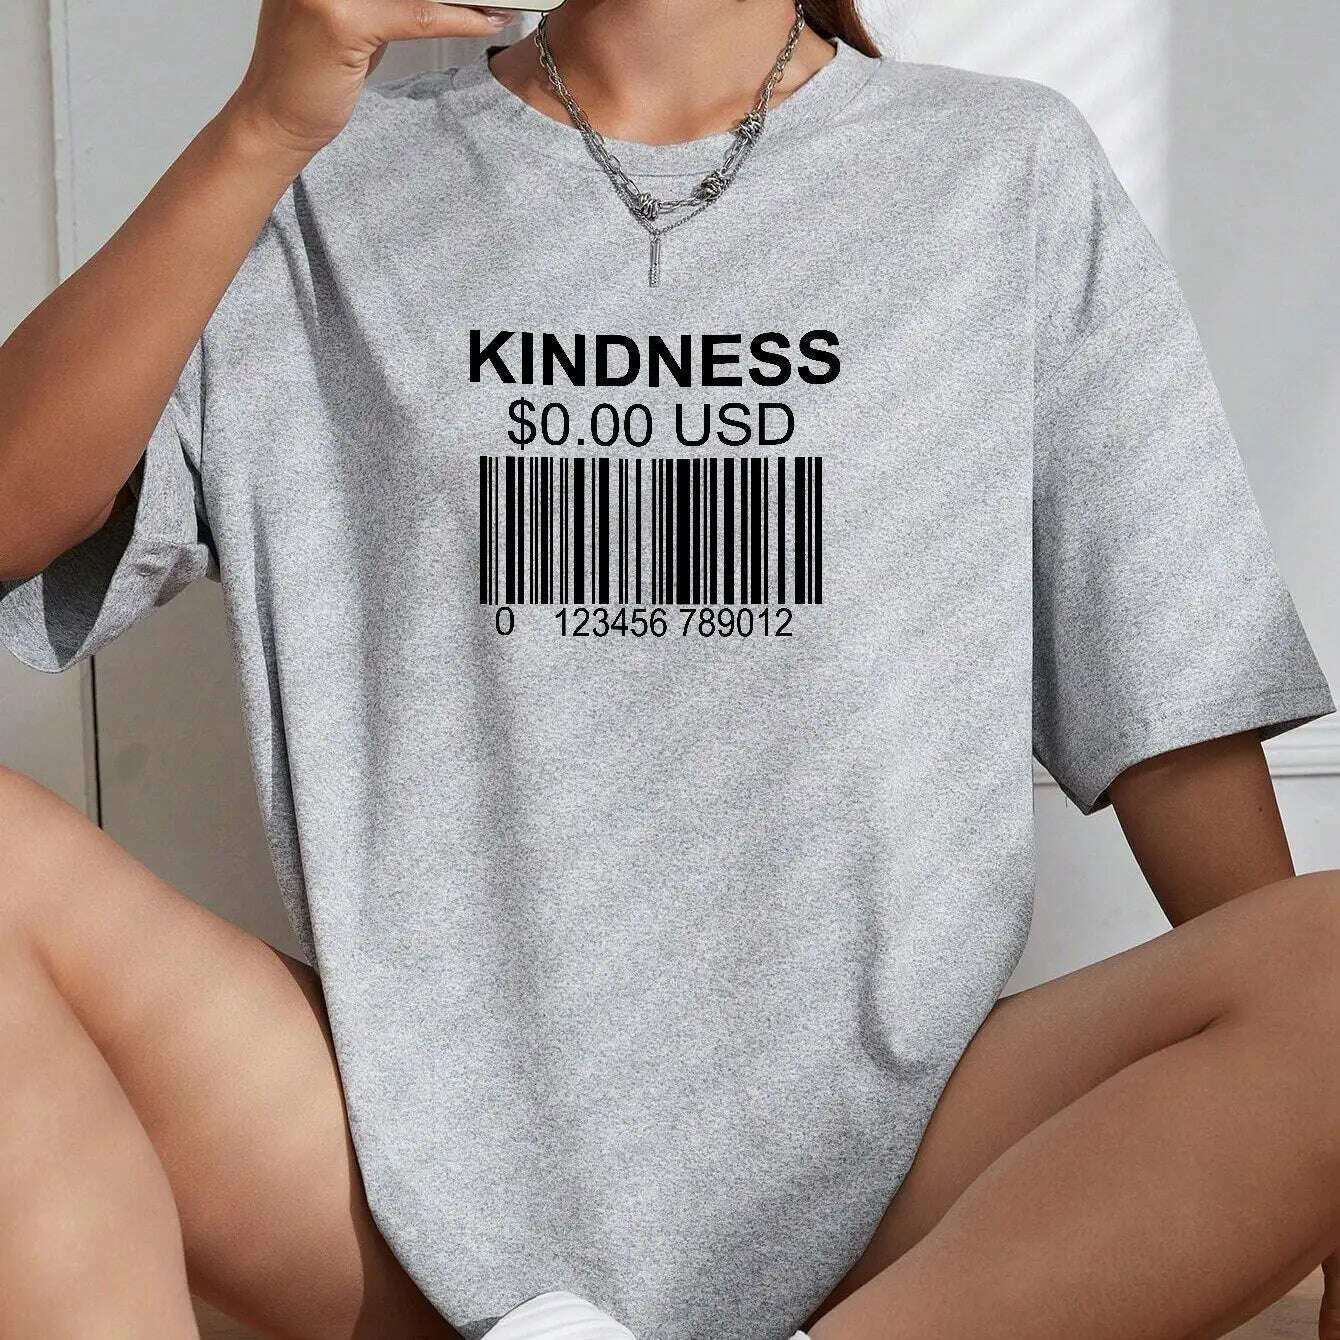 KIMLUD, Kindness Creative Bar Code Creativity Womens Short Sleeve Funny Casual Oversize Tops All-math Trend T-Shirts Woman Tee Clothing, KIMLUD Women's Clothes